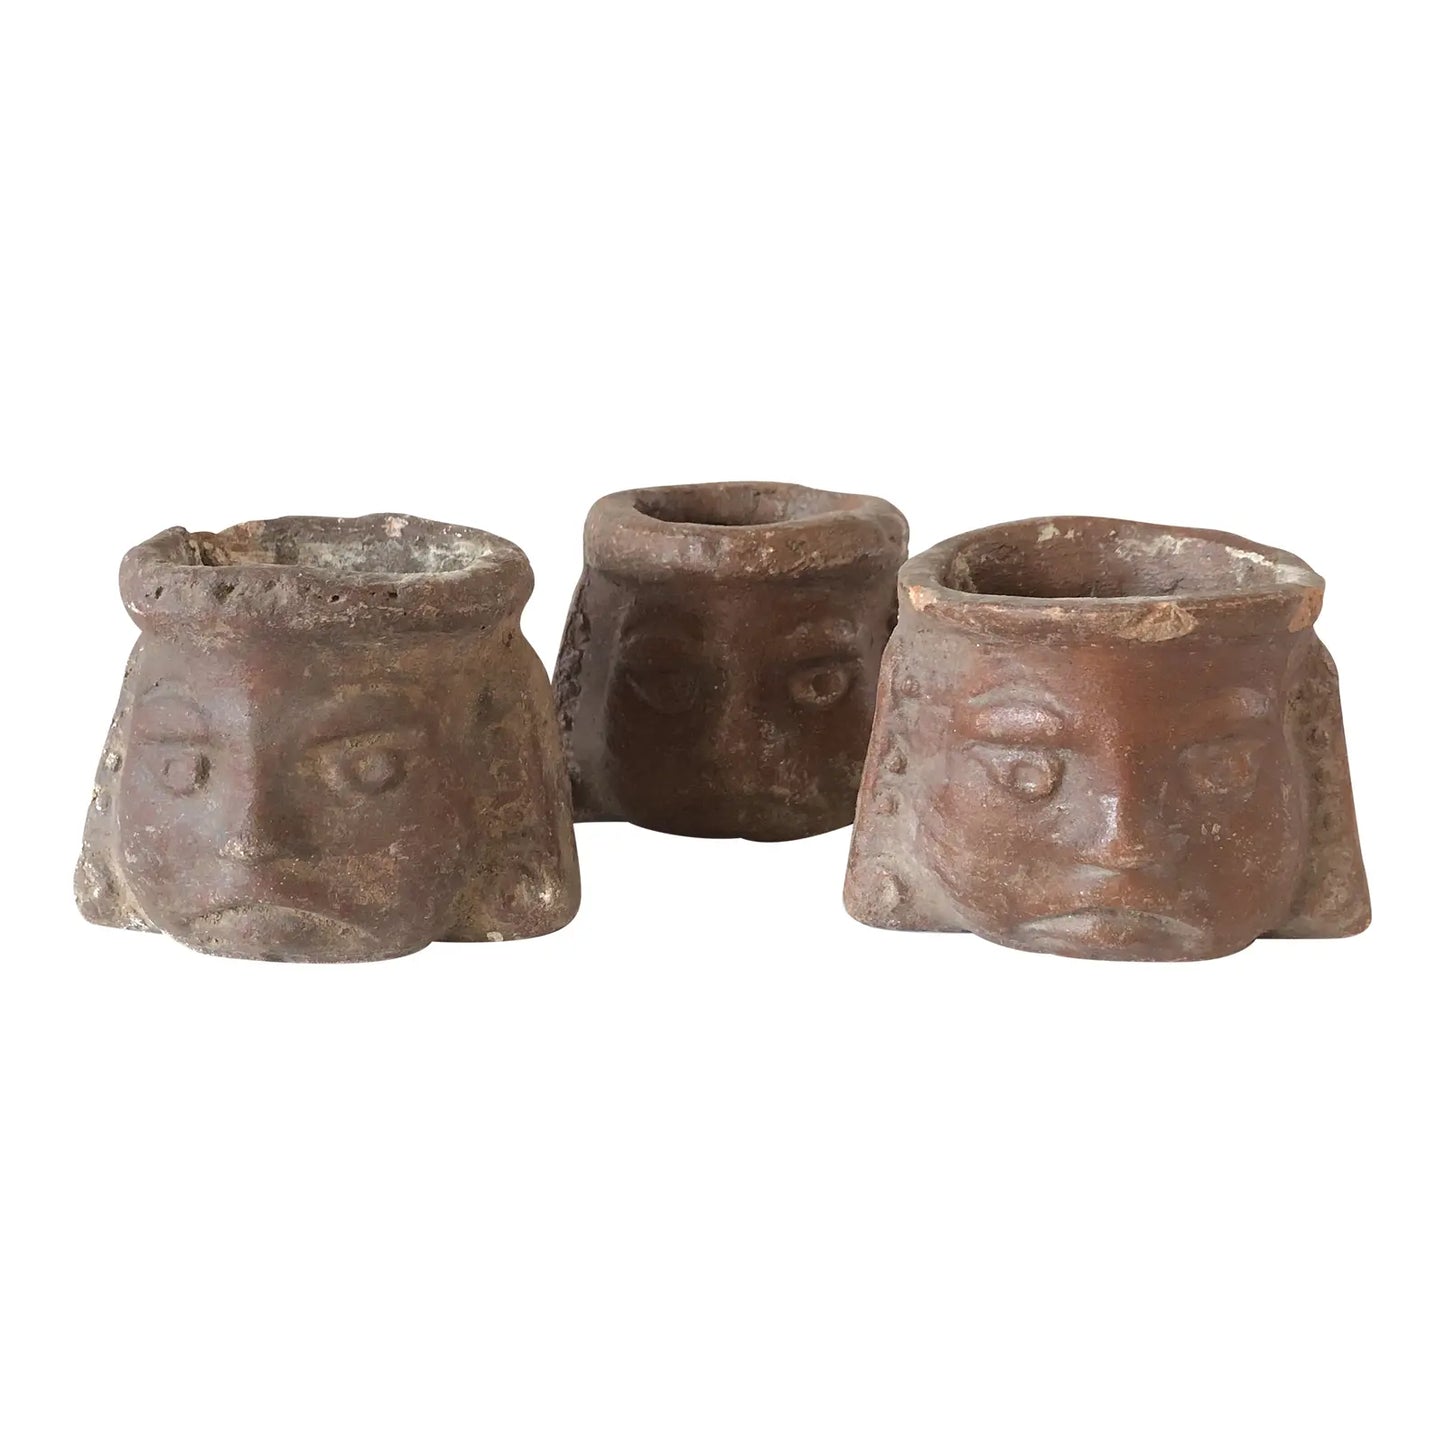 Vintage Ceramic Pots From Oaxaca Mexico